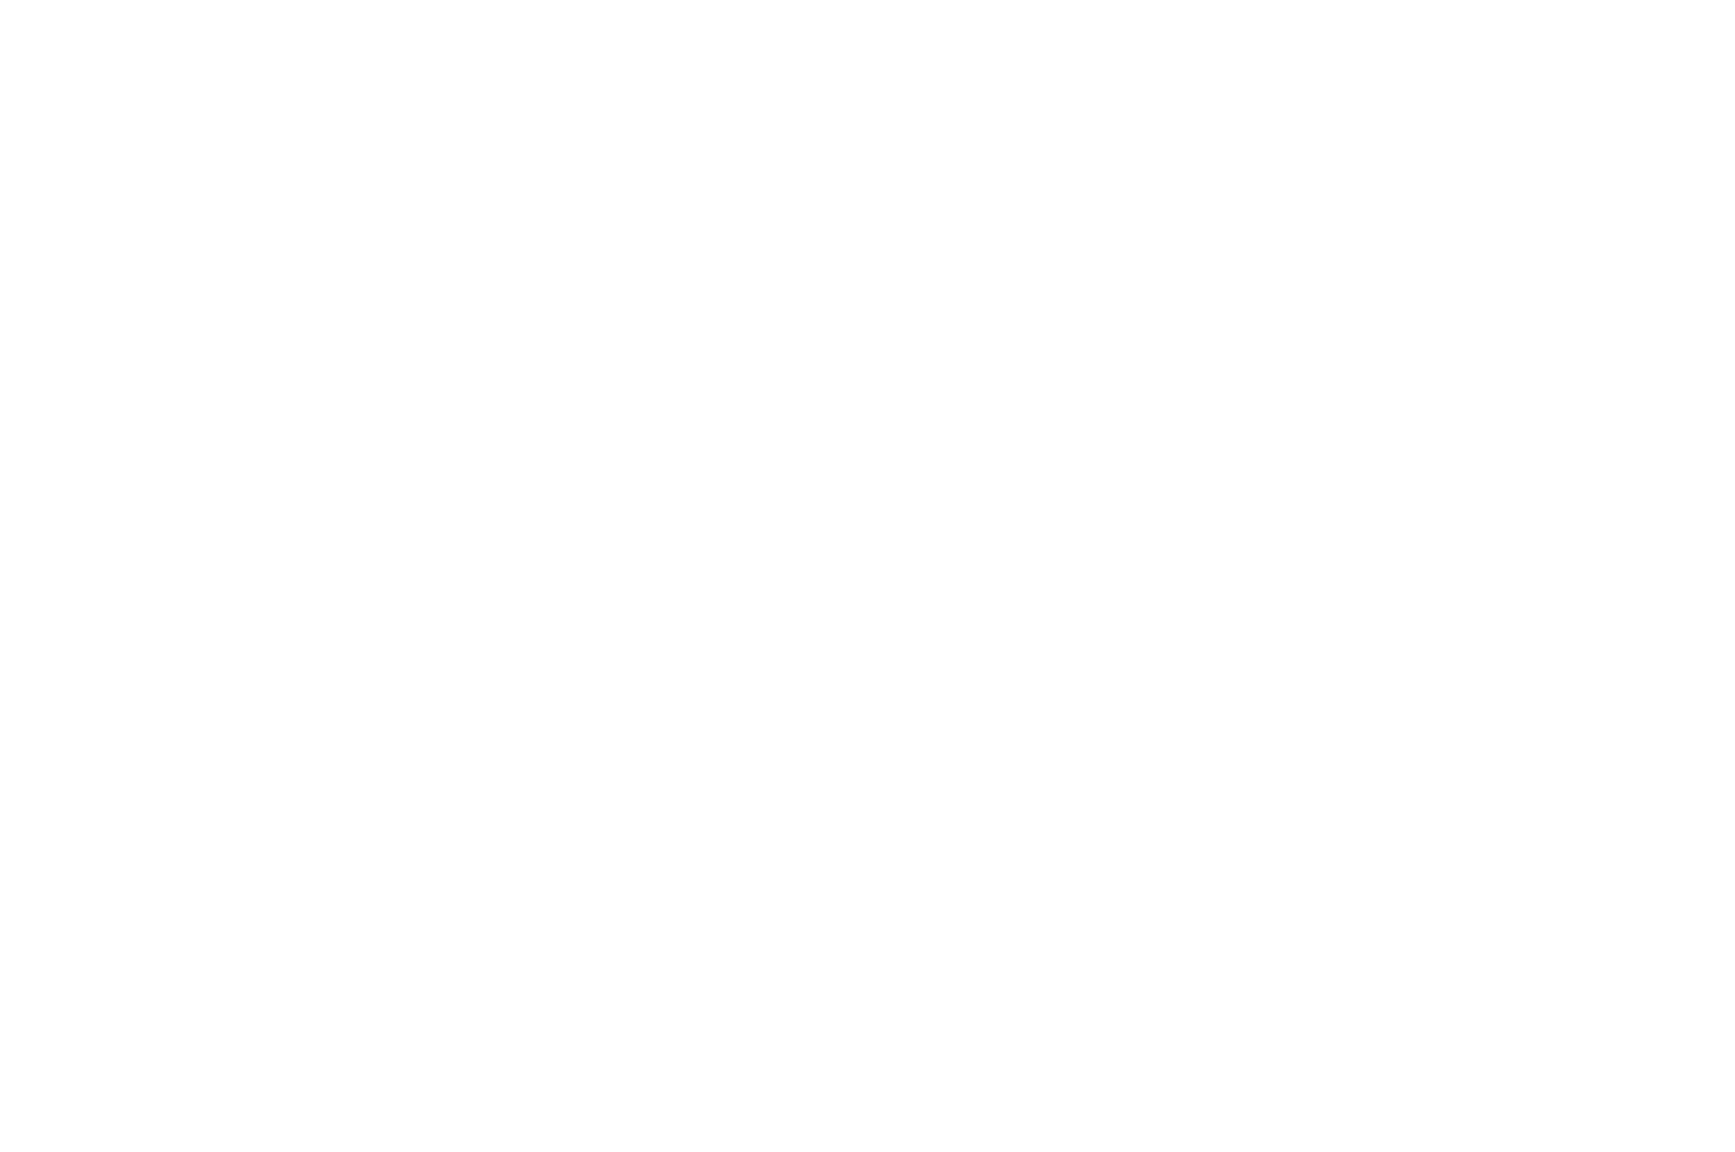 Winner Best Actress Milwaukee Twisted Dreams Film Festival 2022